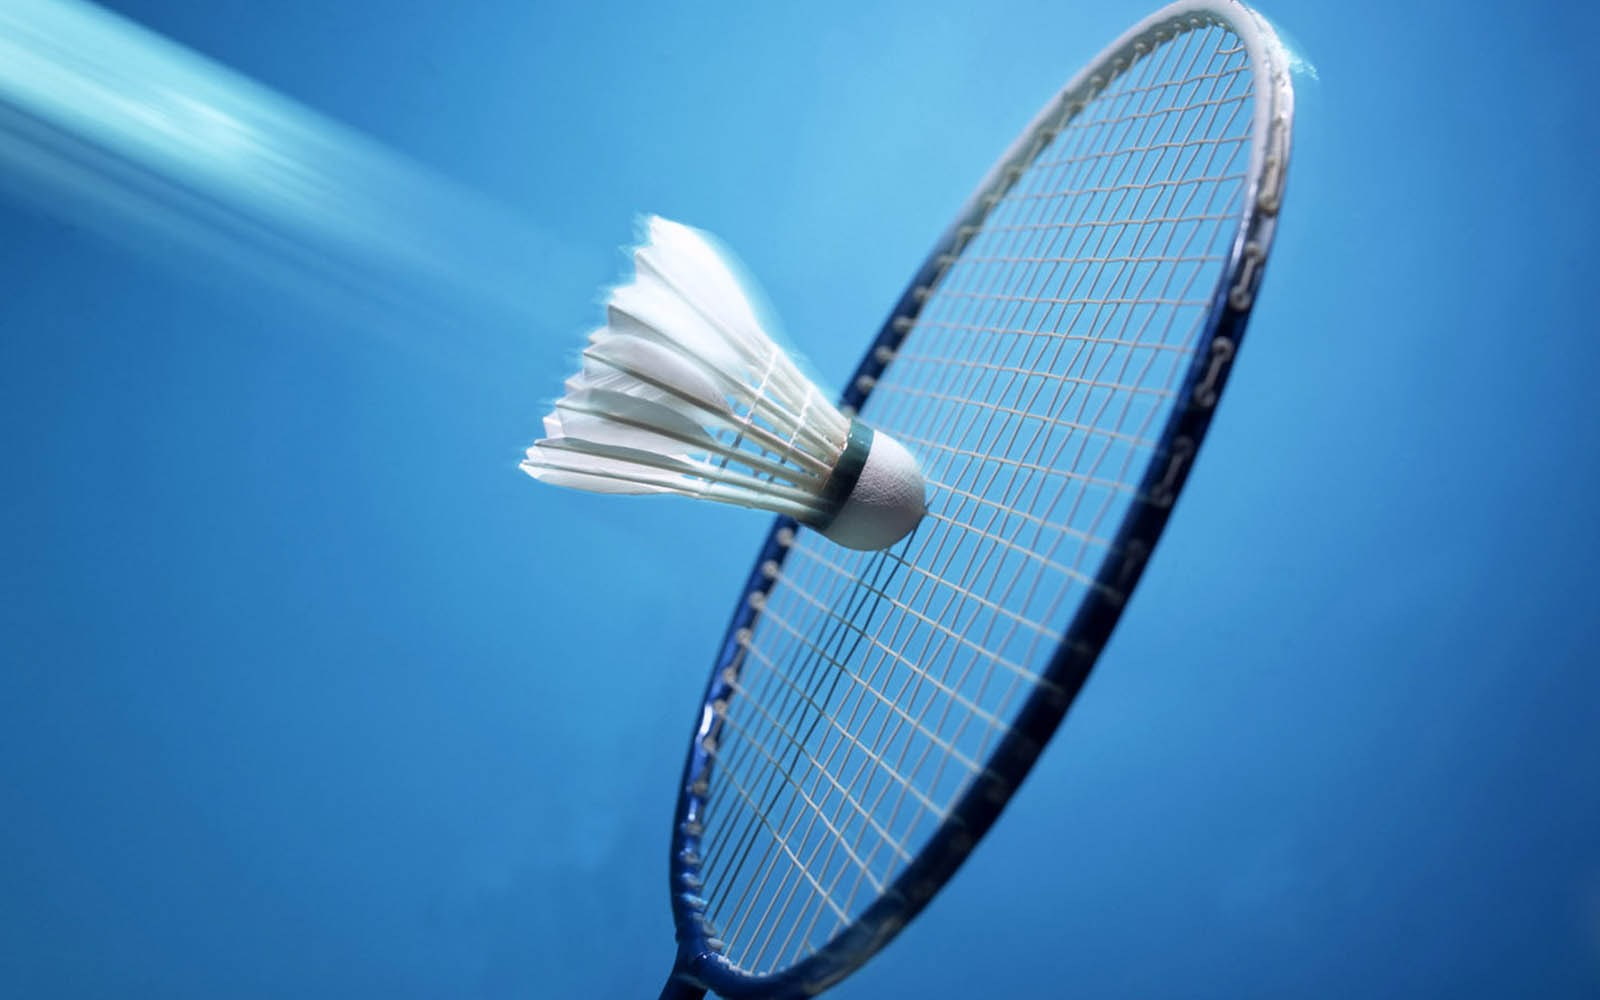 badminton, sport, blue, racket, tennis, tennis racket, motion